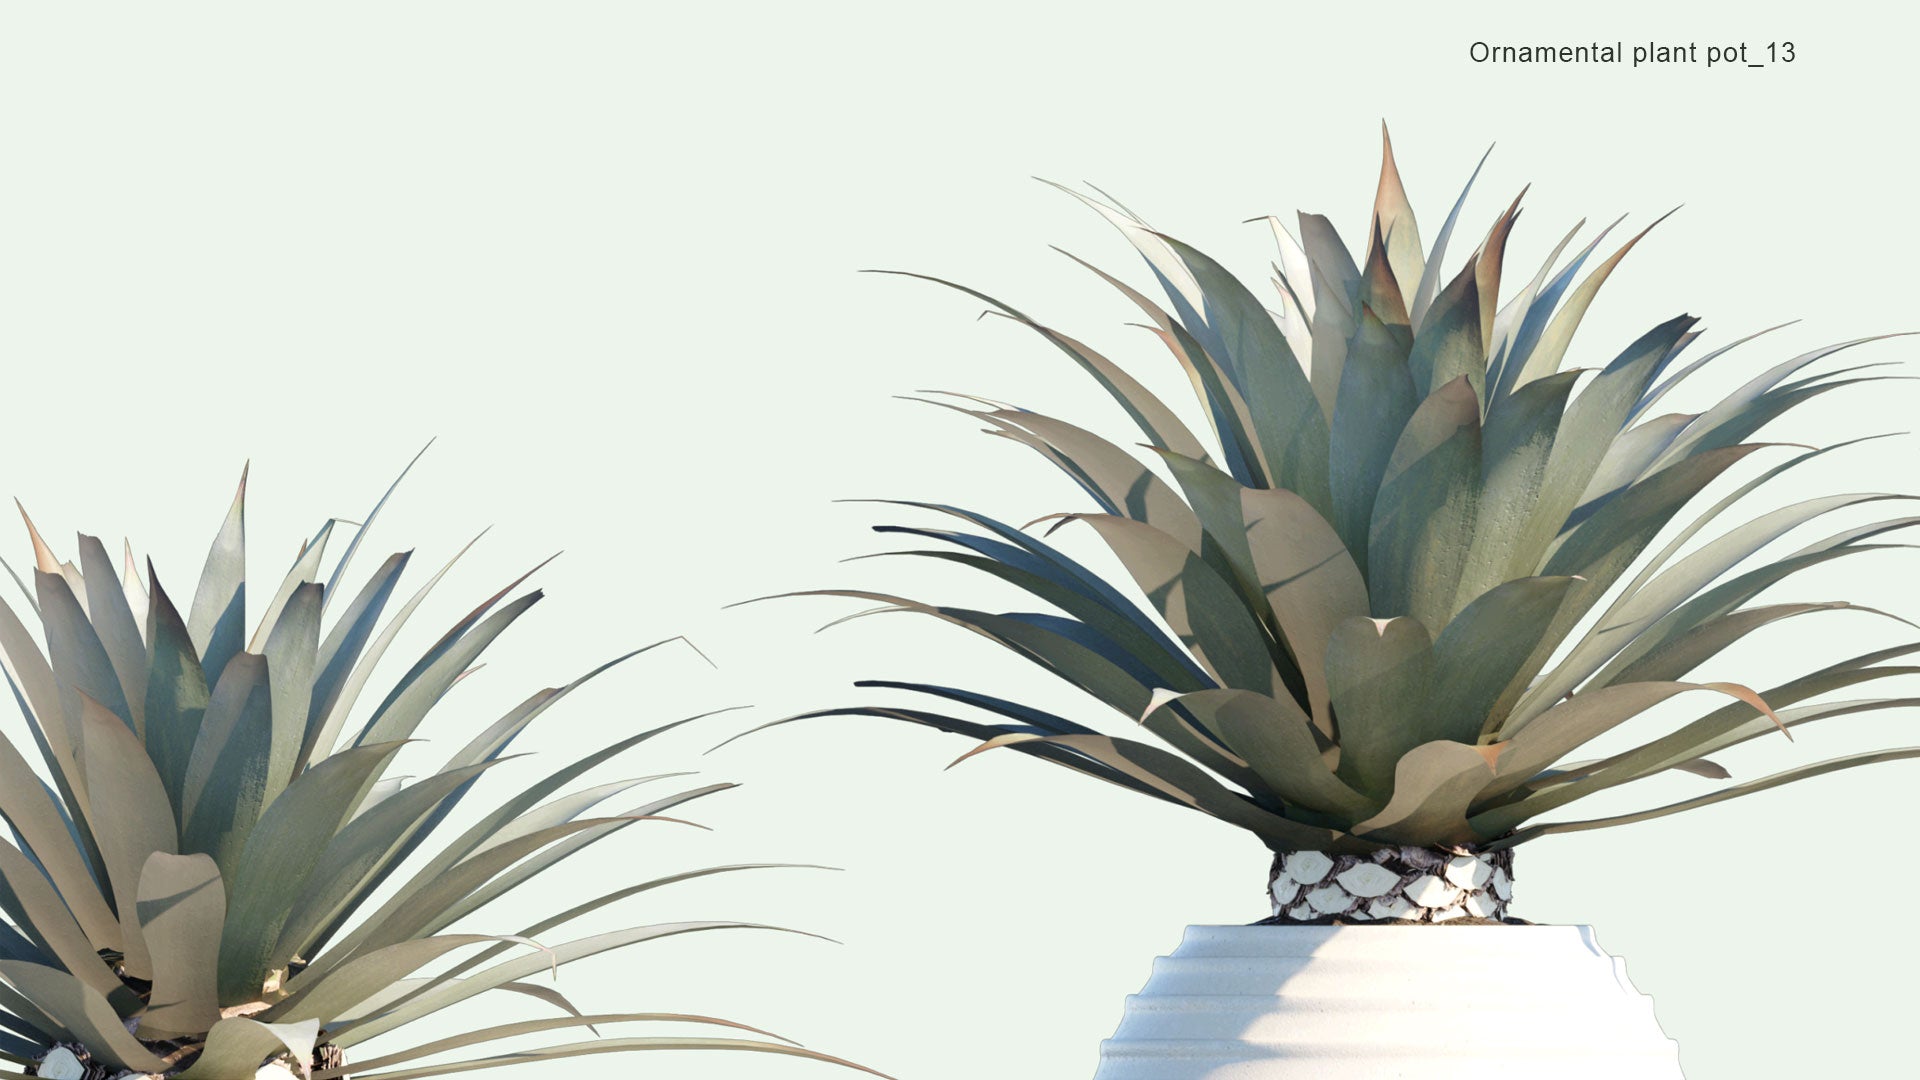 2D Ornamental Pot Plant 13 - Agave Tequilana